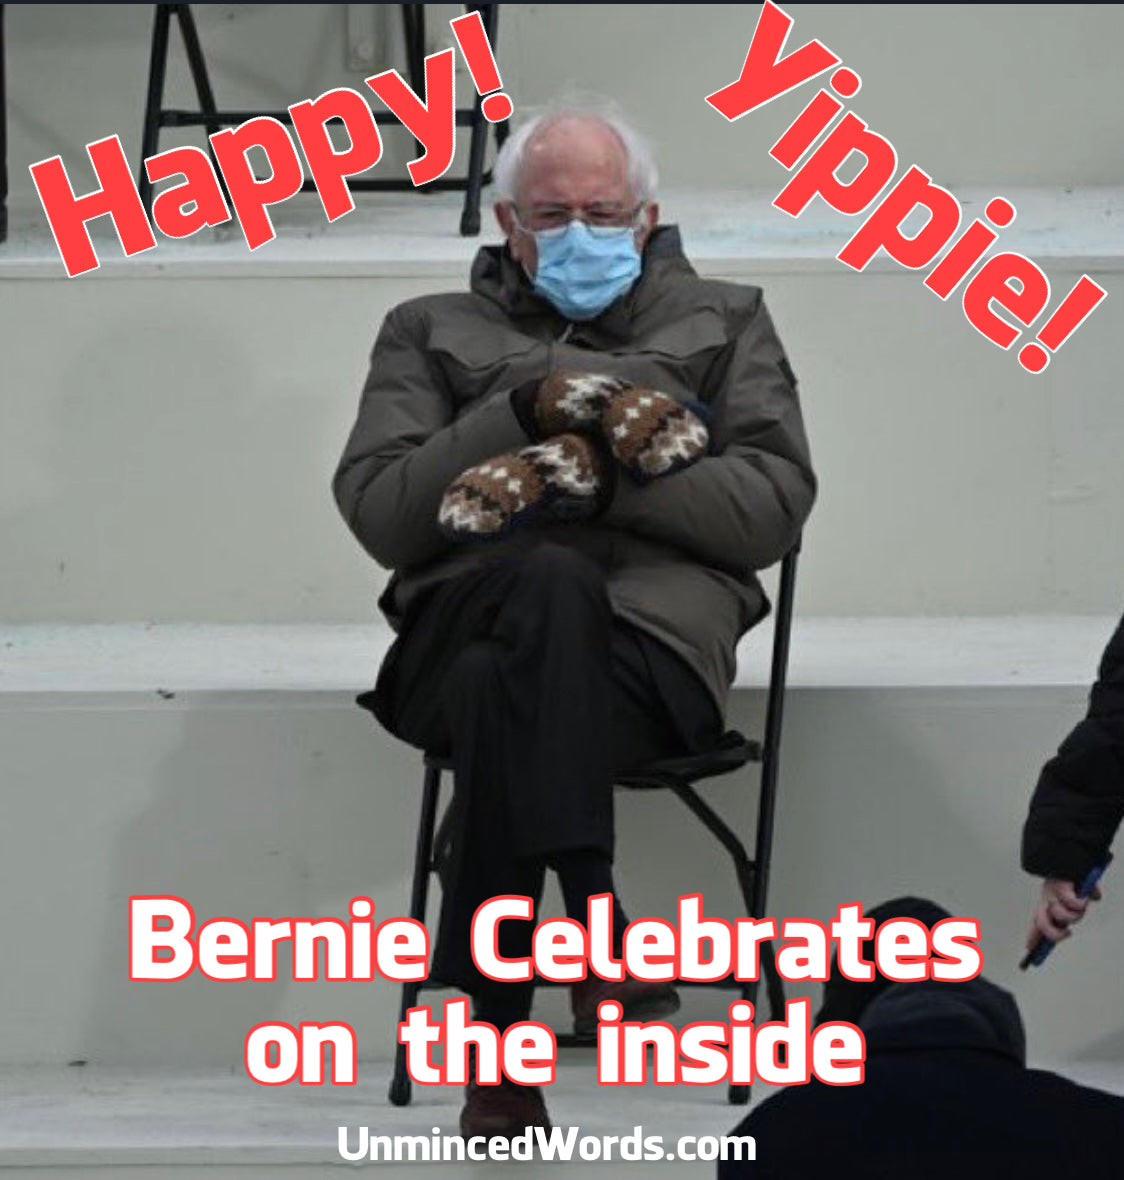 Bernie celebrates on the inside